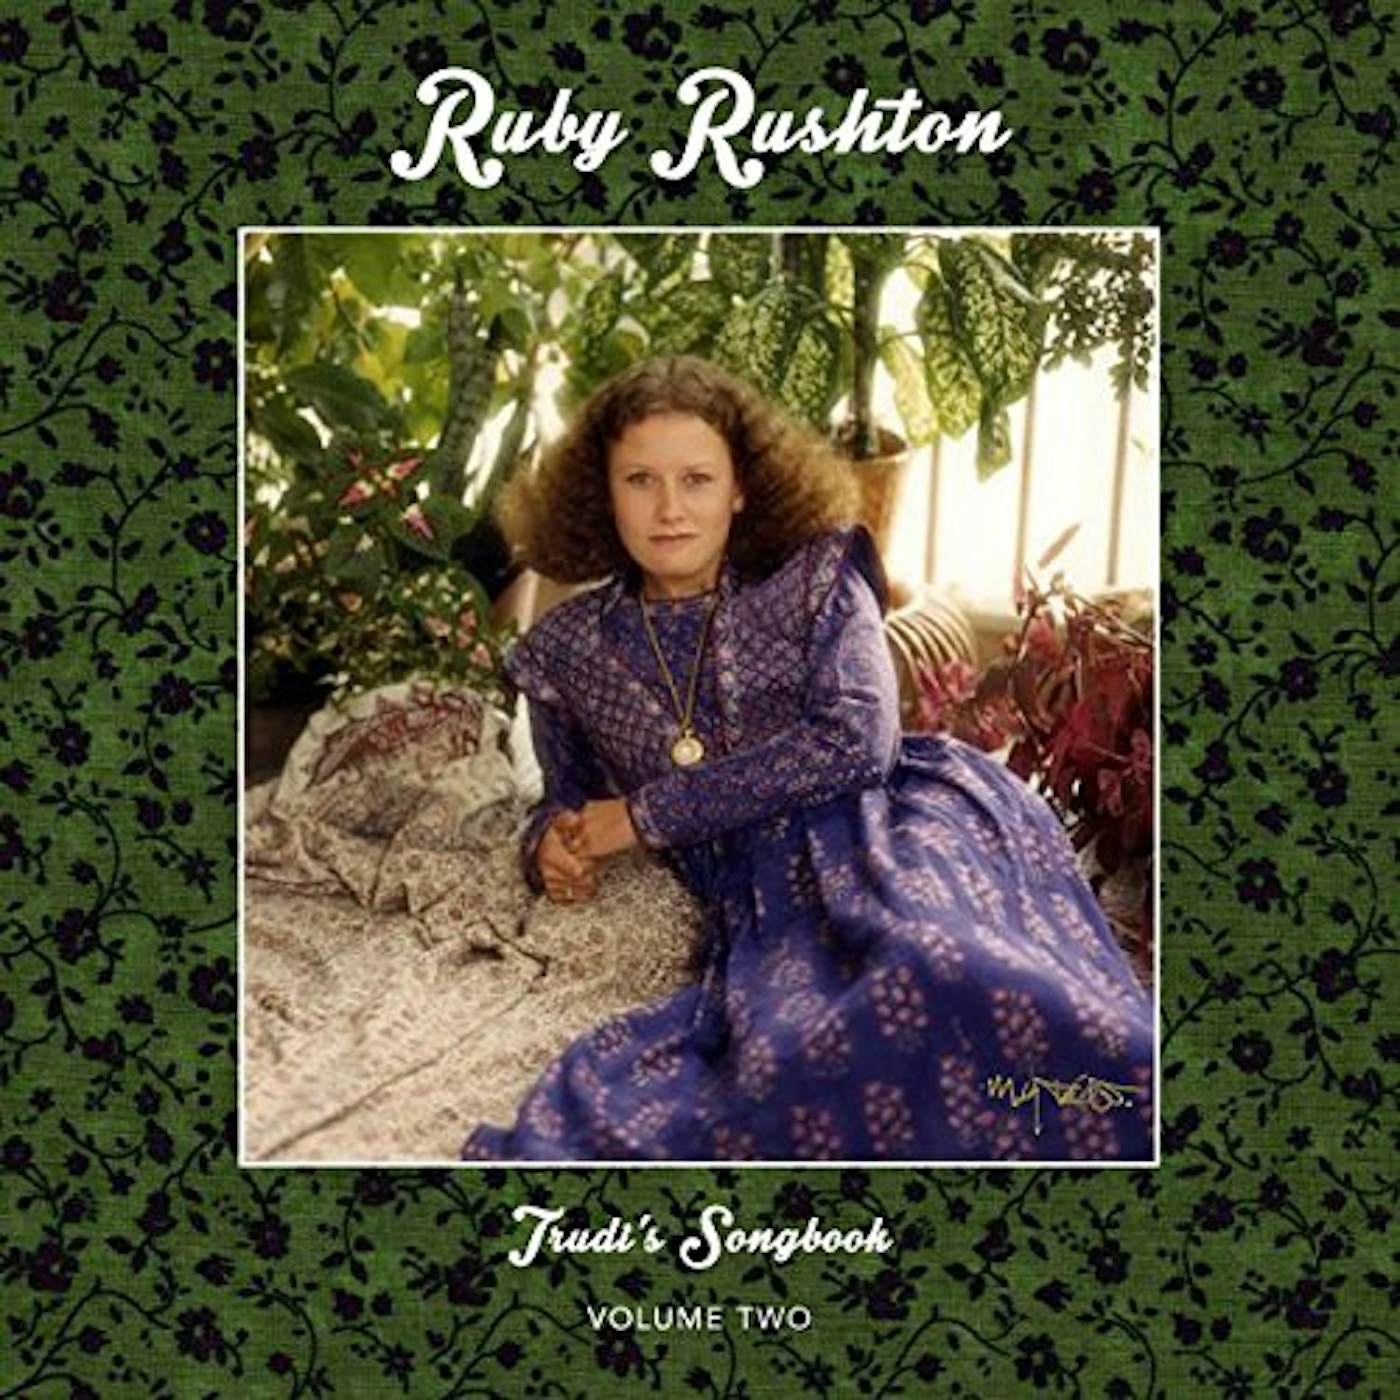 Ruby Rushton TRUDI'S SONGBOOK VOL 2 Vinyl Record